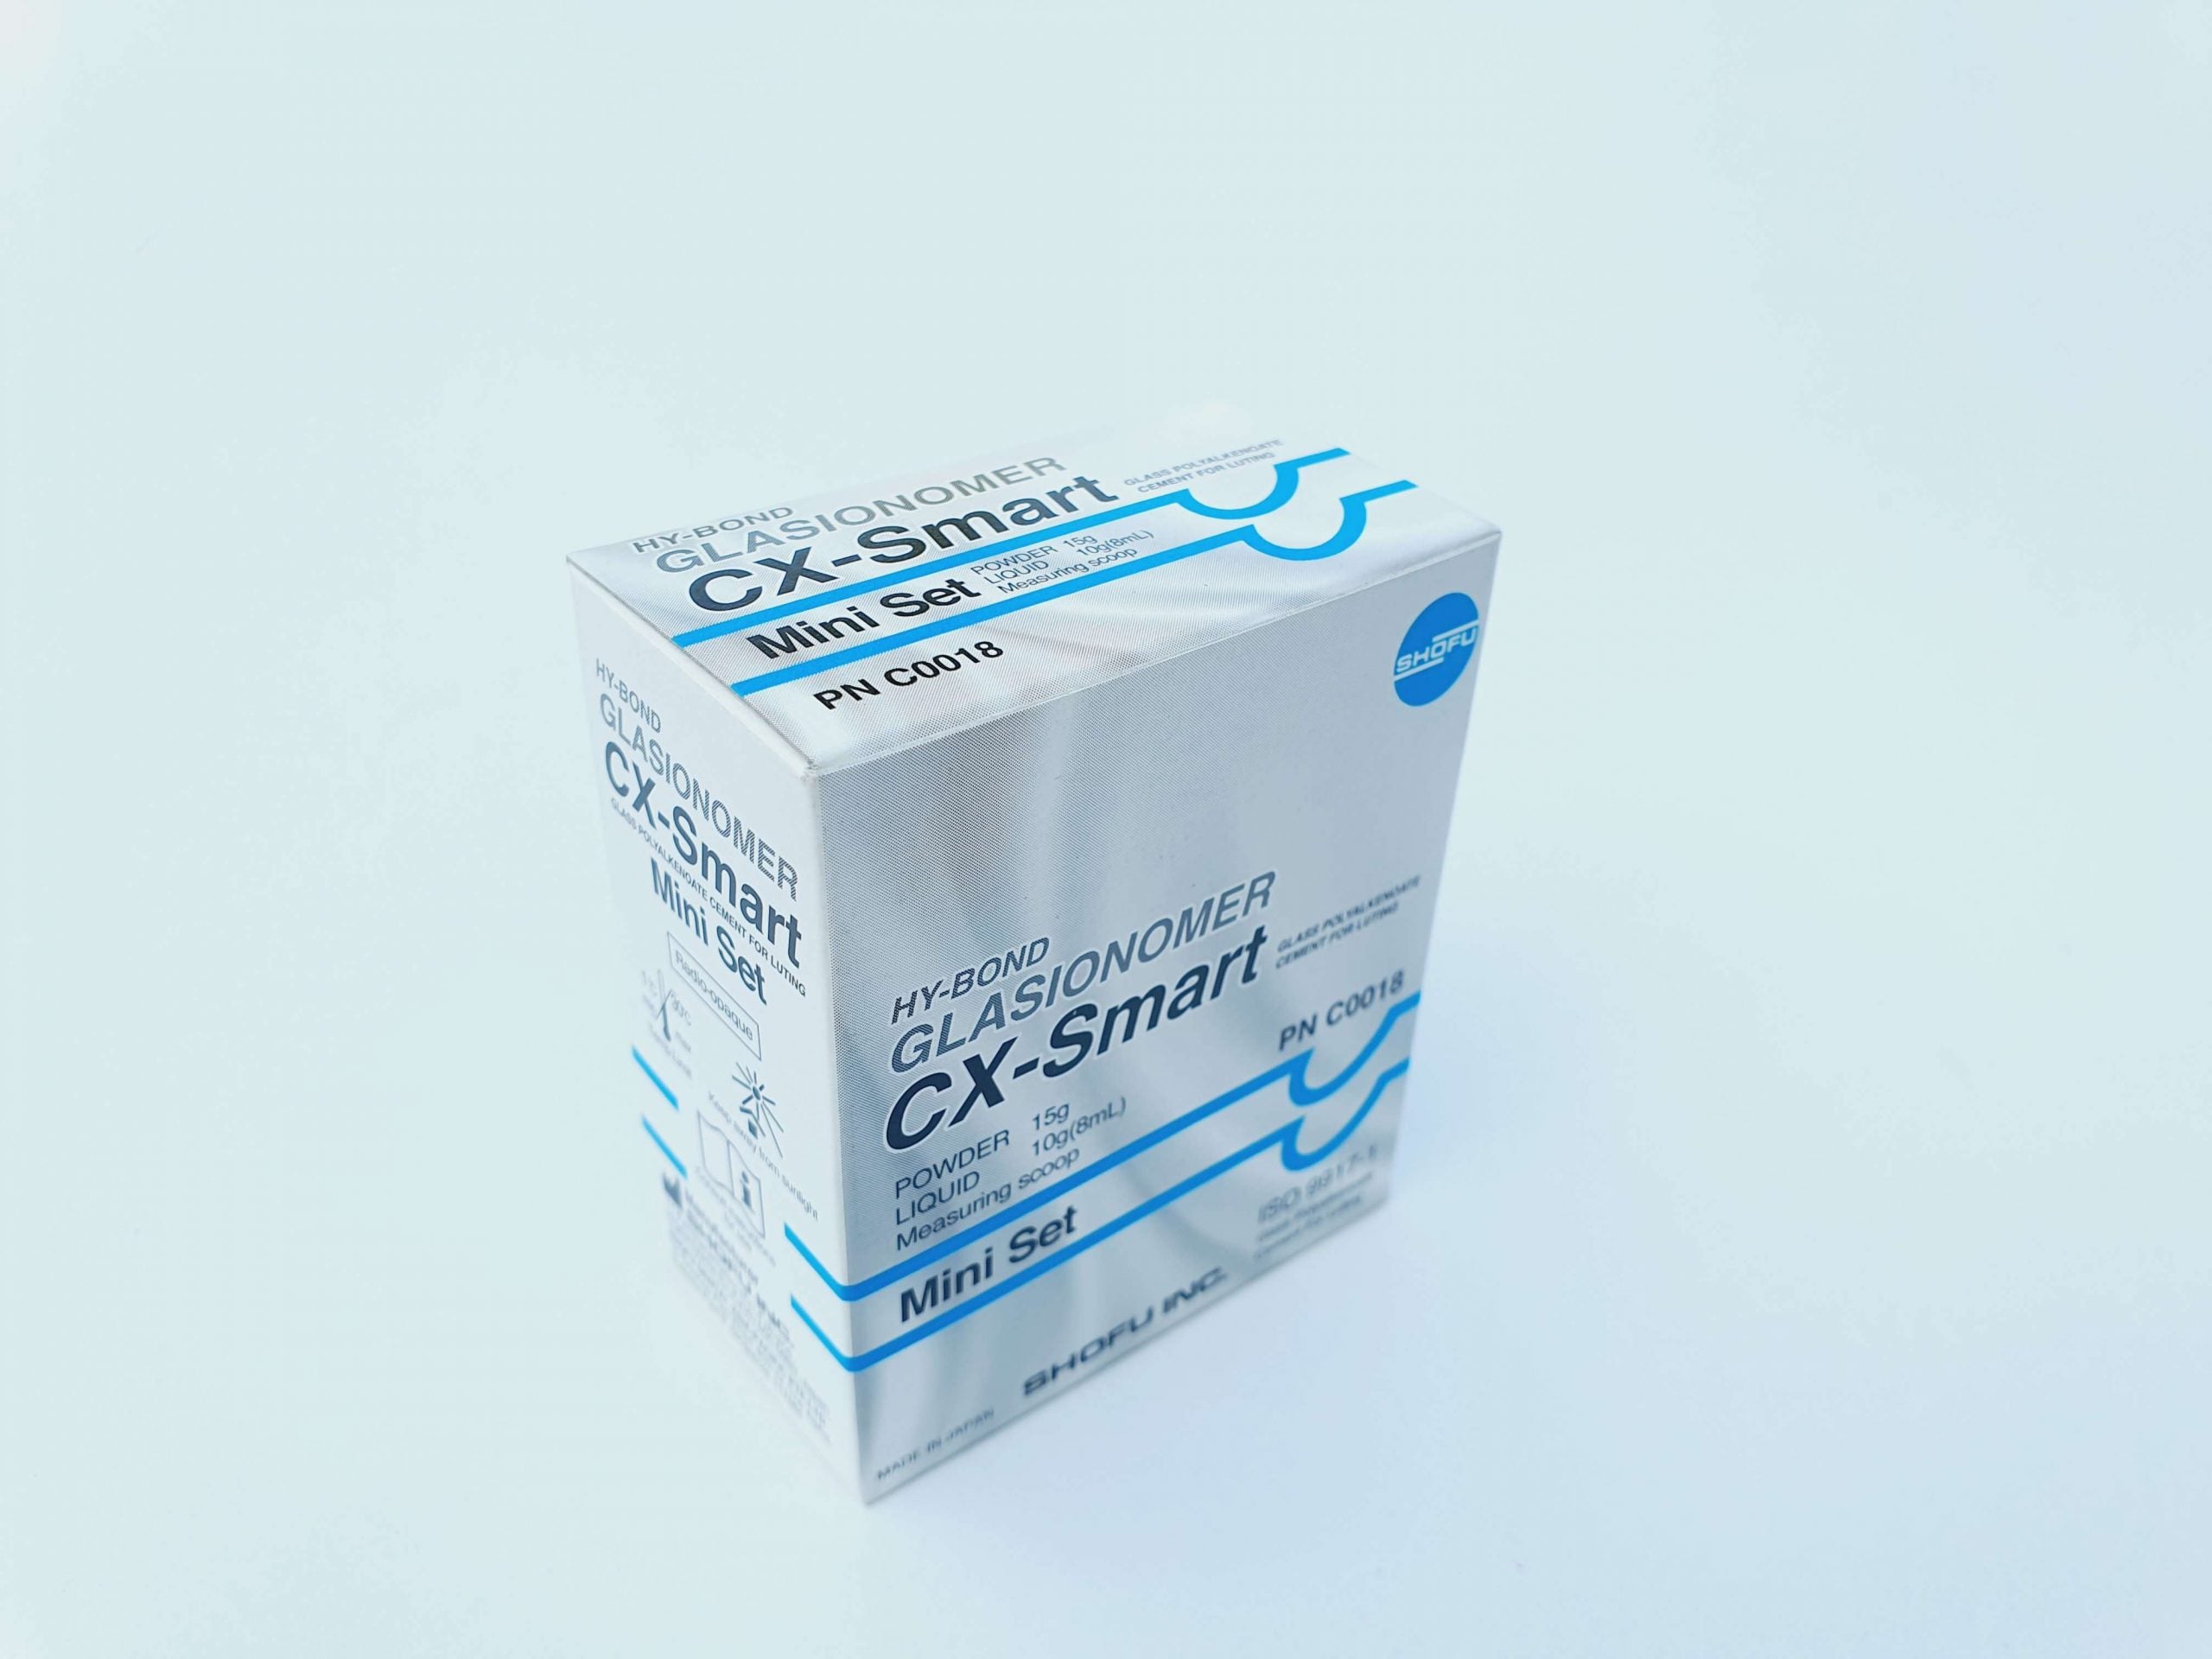 SHOFU- HY-BOND GLASIONOMER CX-SMART(Glass Polyalkenoate Cement For Luting) – SHOFU Dental Material Supplies in Pakistan